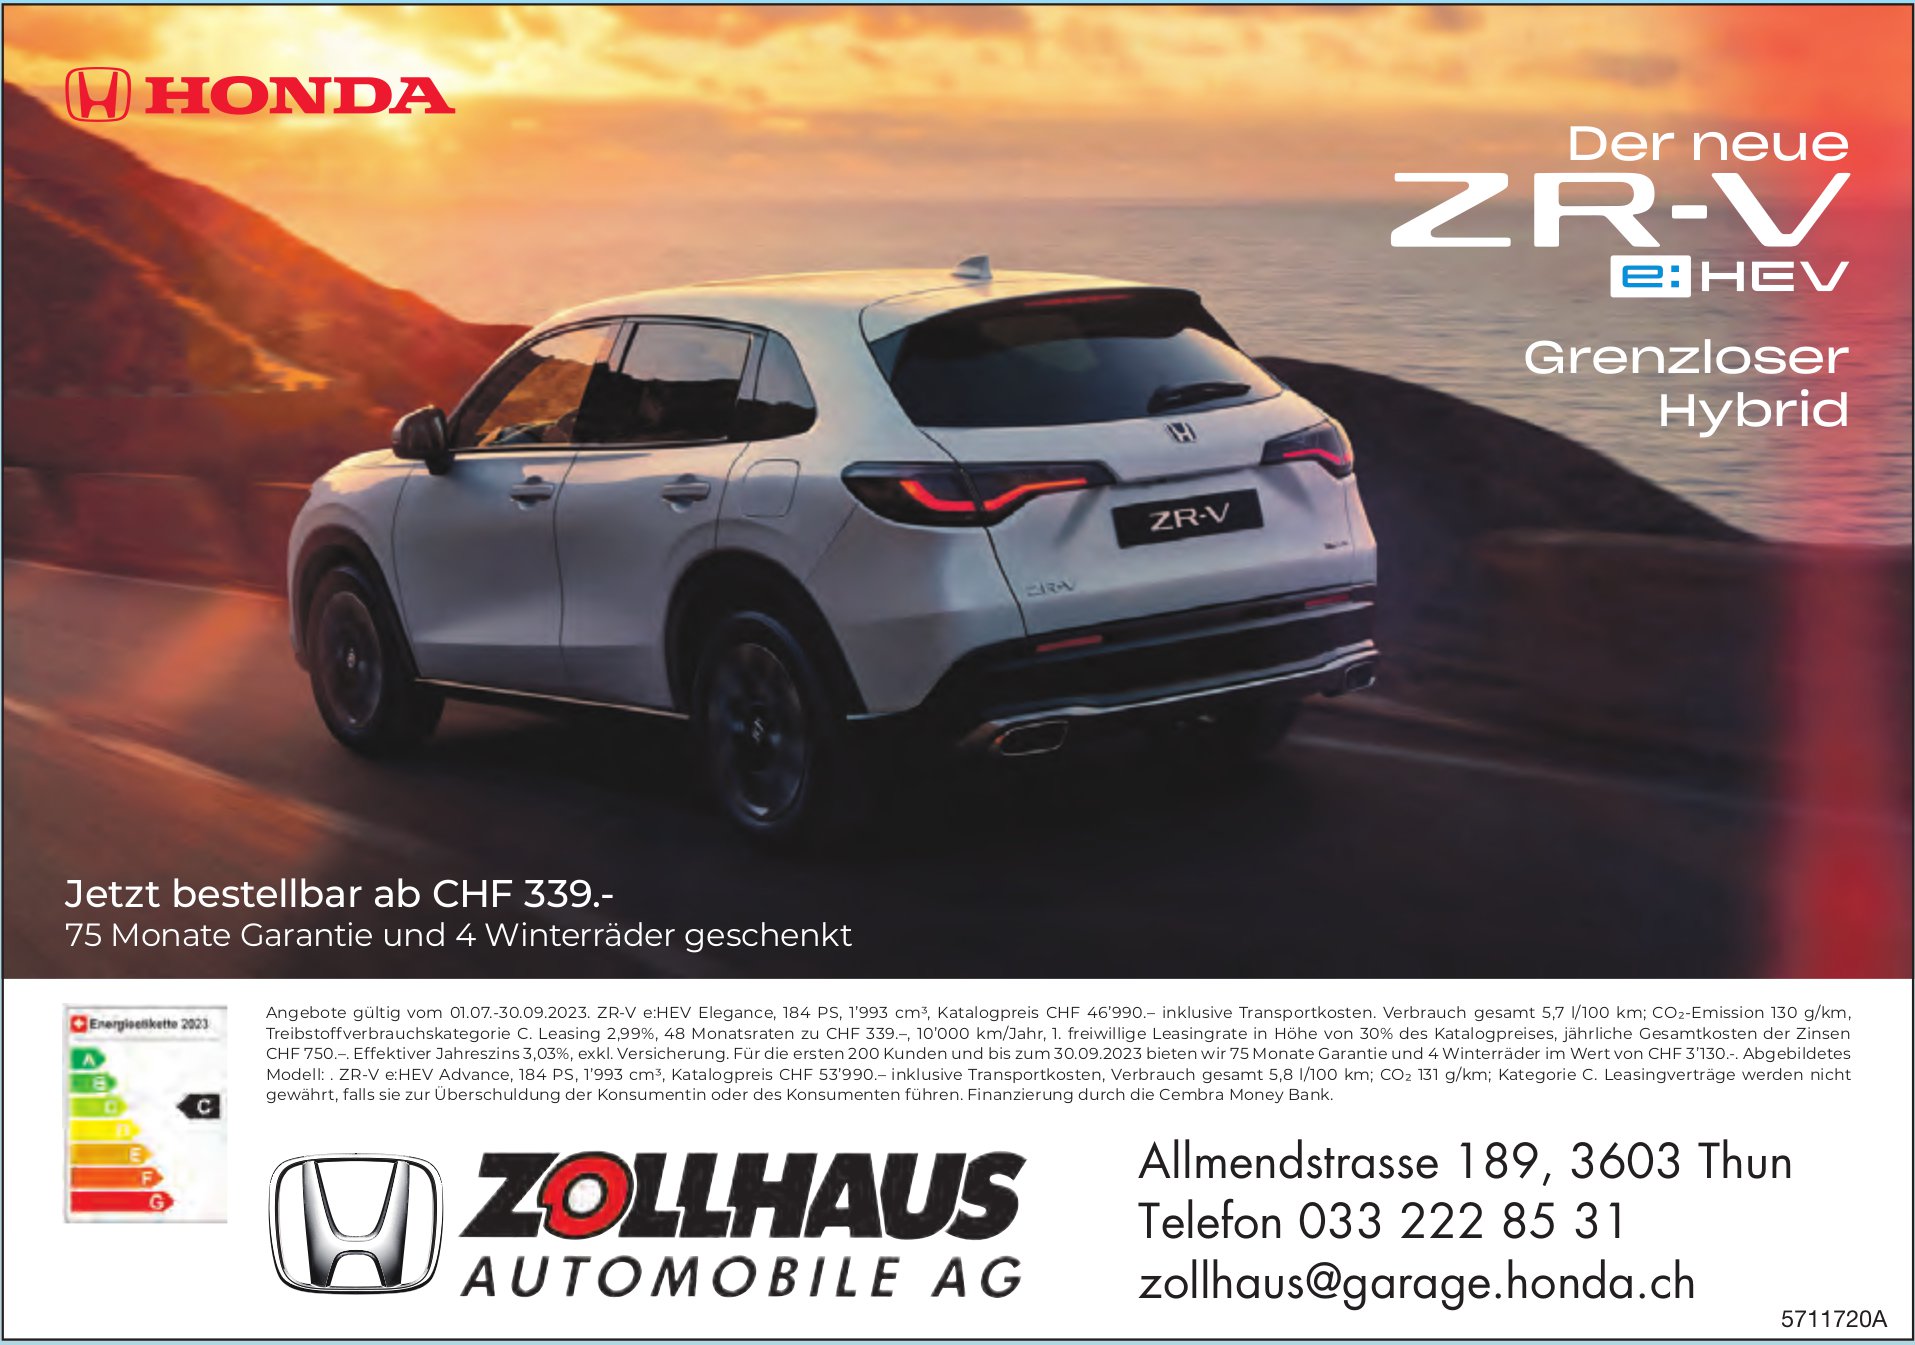 Zollhaus Automobile AG, Thun - Der neue Honda ZR-V e:HEV, Grenzloser Hybrid